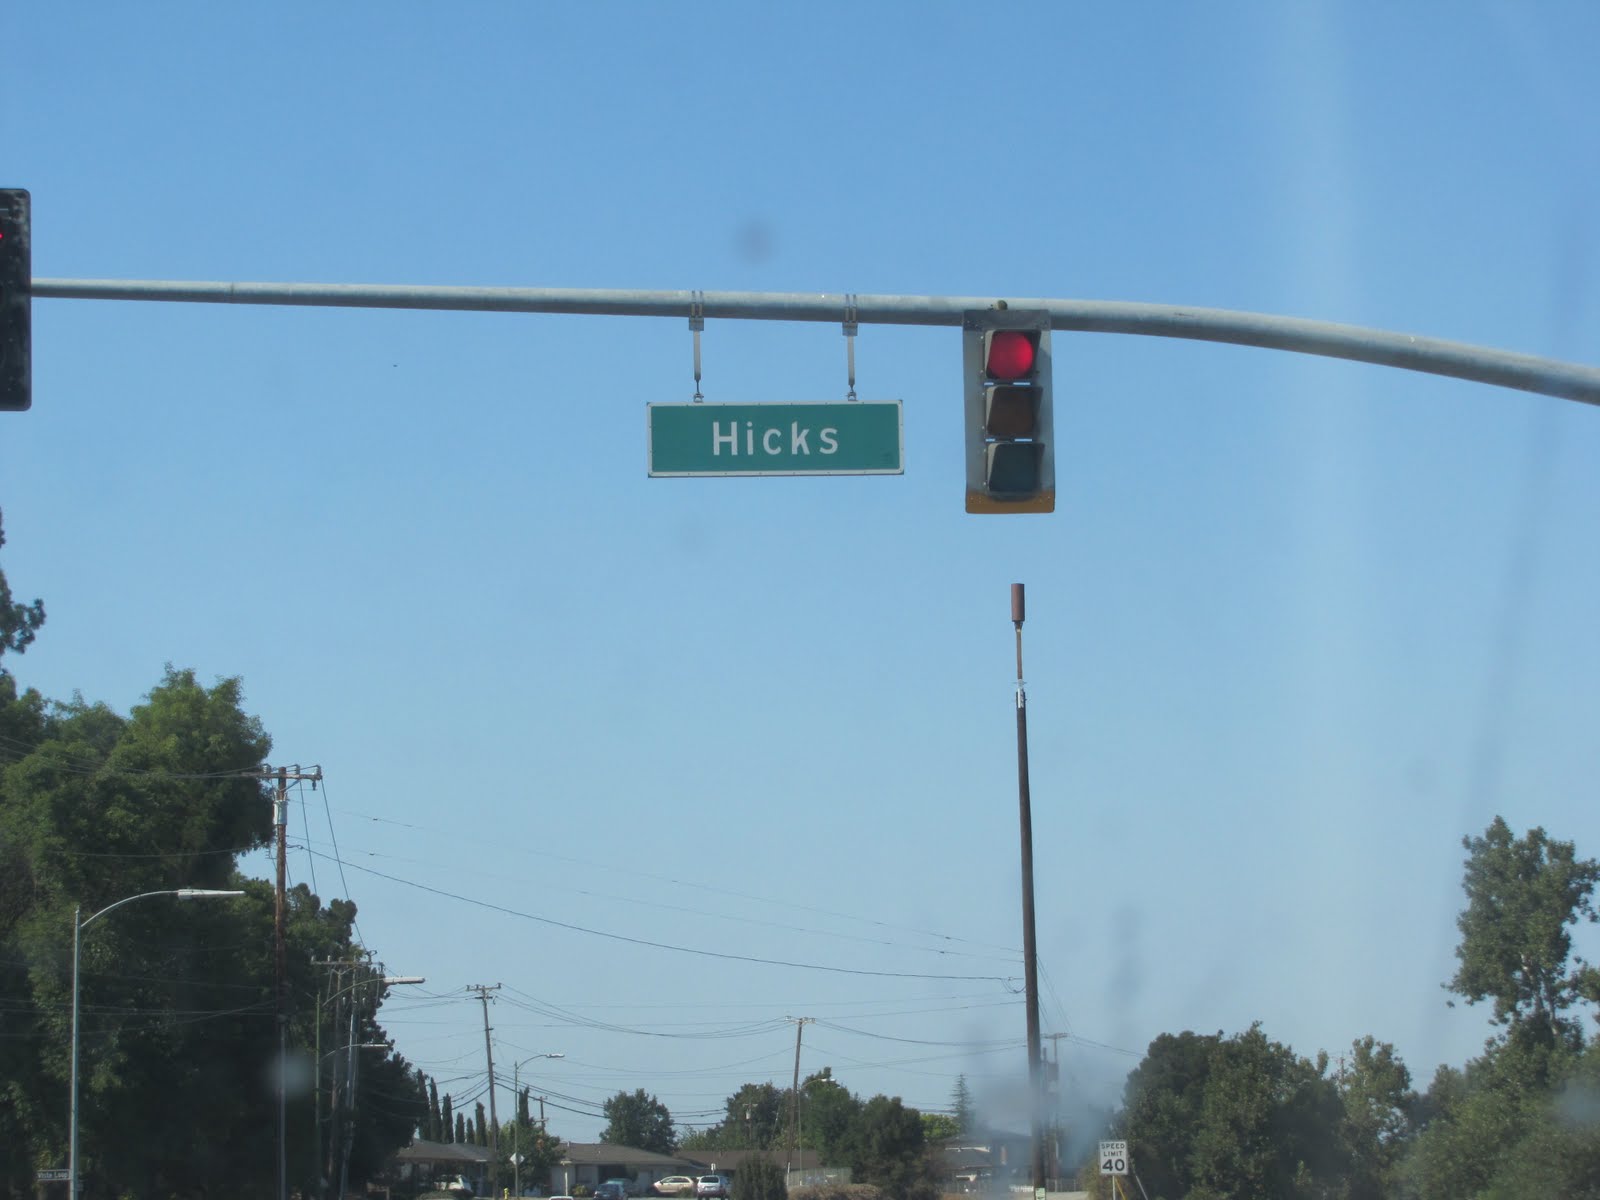 Hicks Road